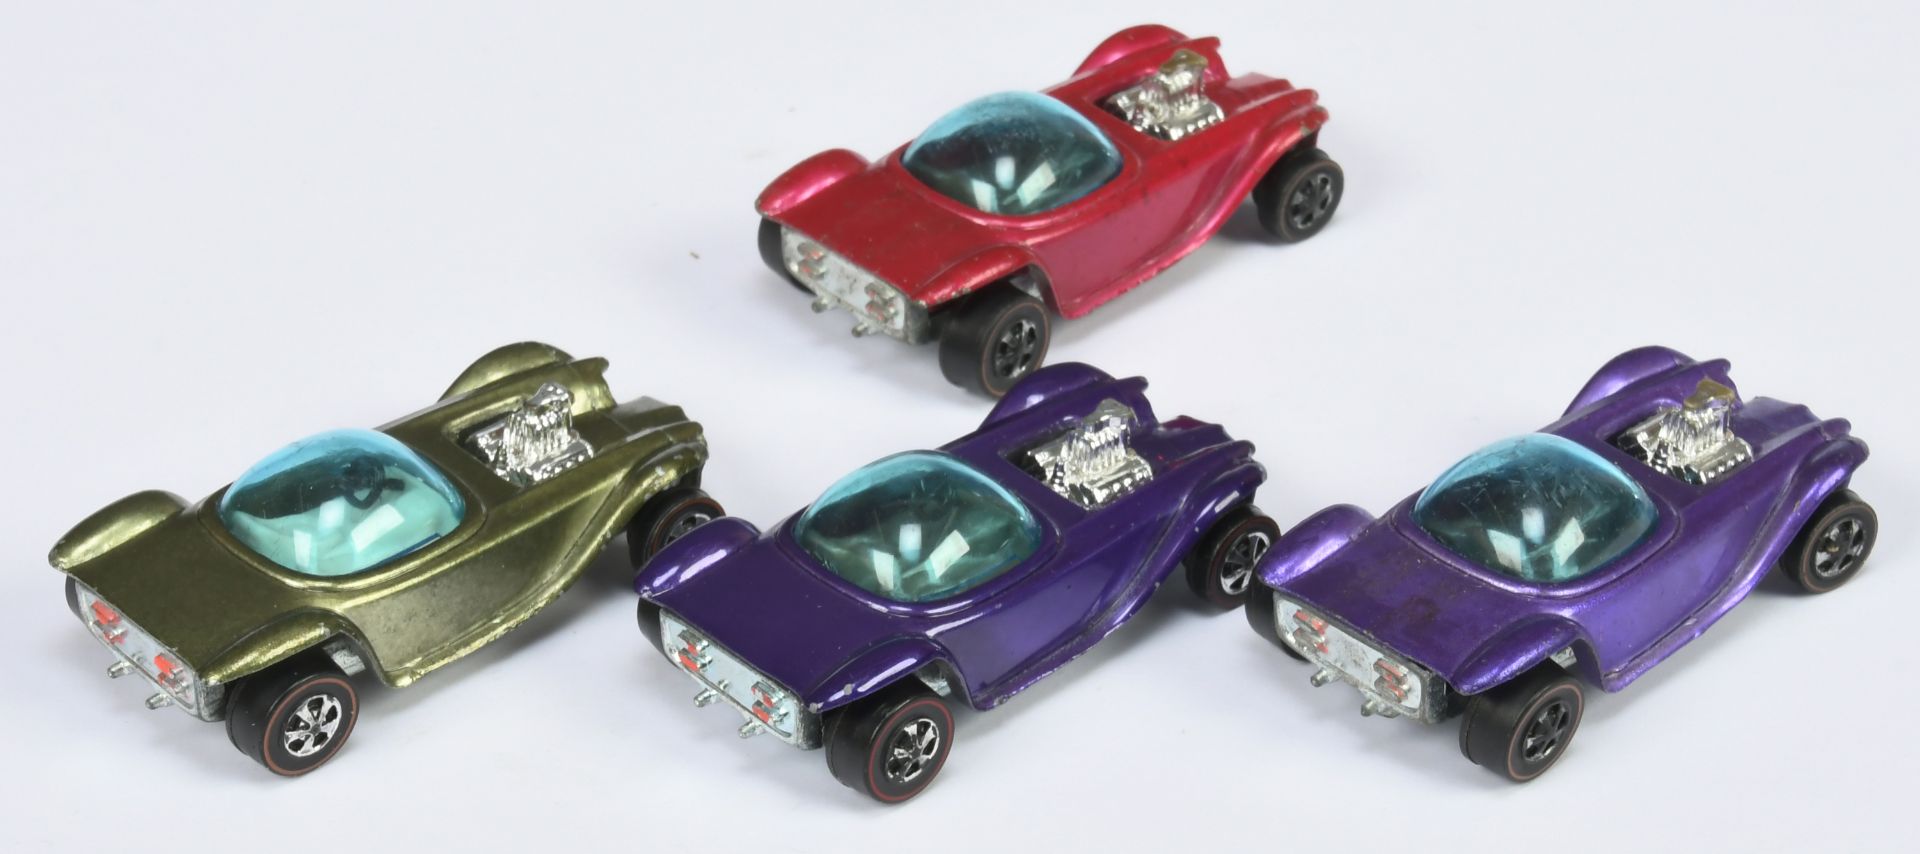 Mattel Hot Wheels - Redline - Beatnik Bandit group (1) champagne gold (2) metallic red (3) purple... - Image 2 of 2